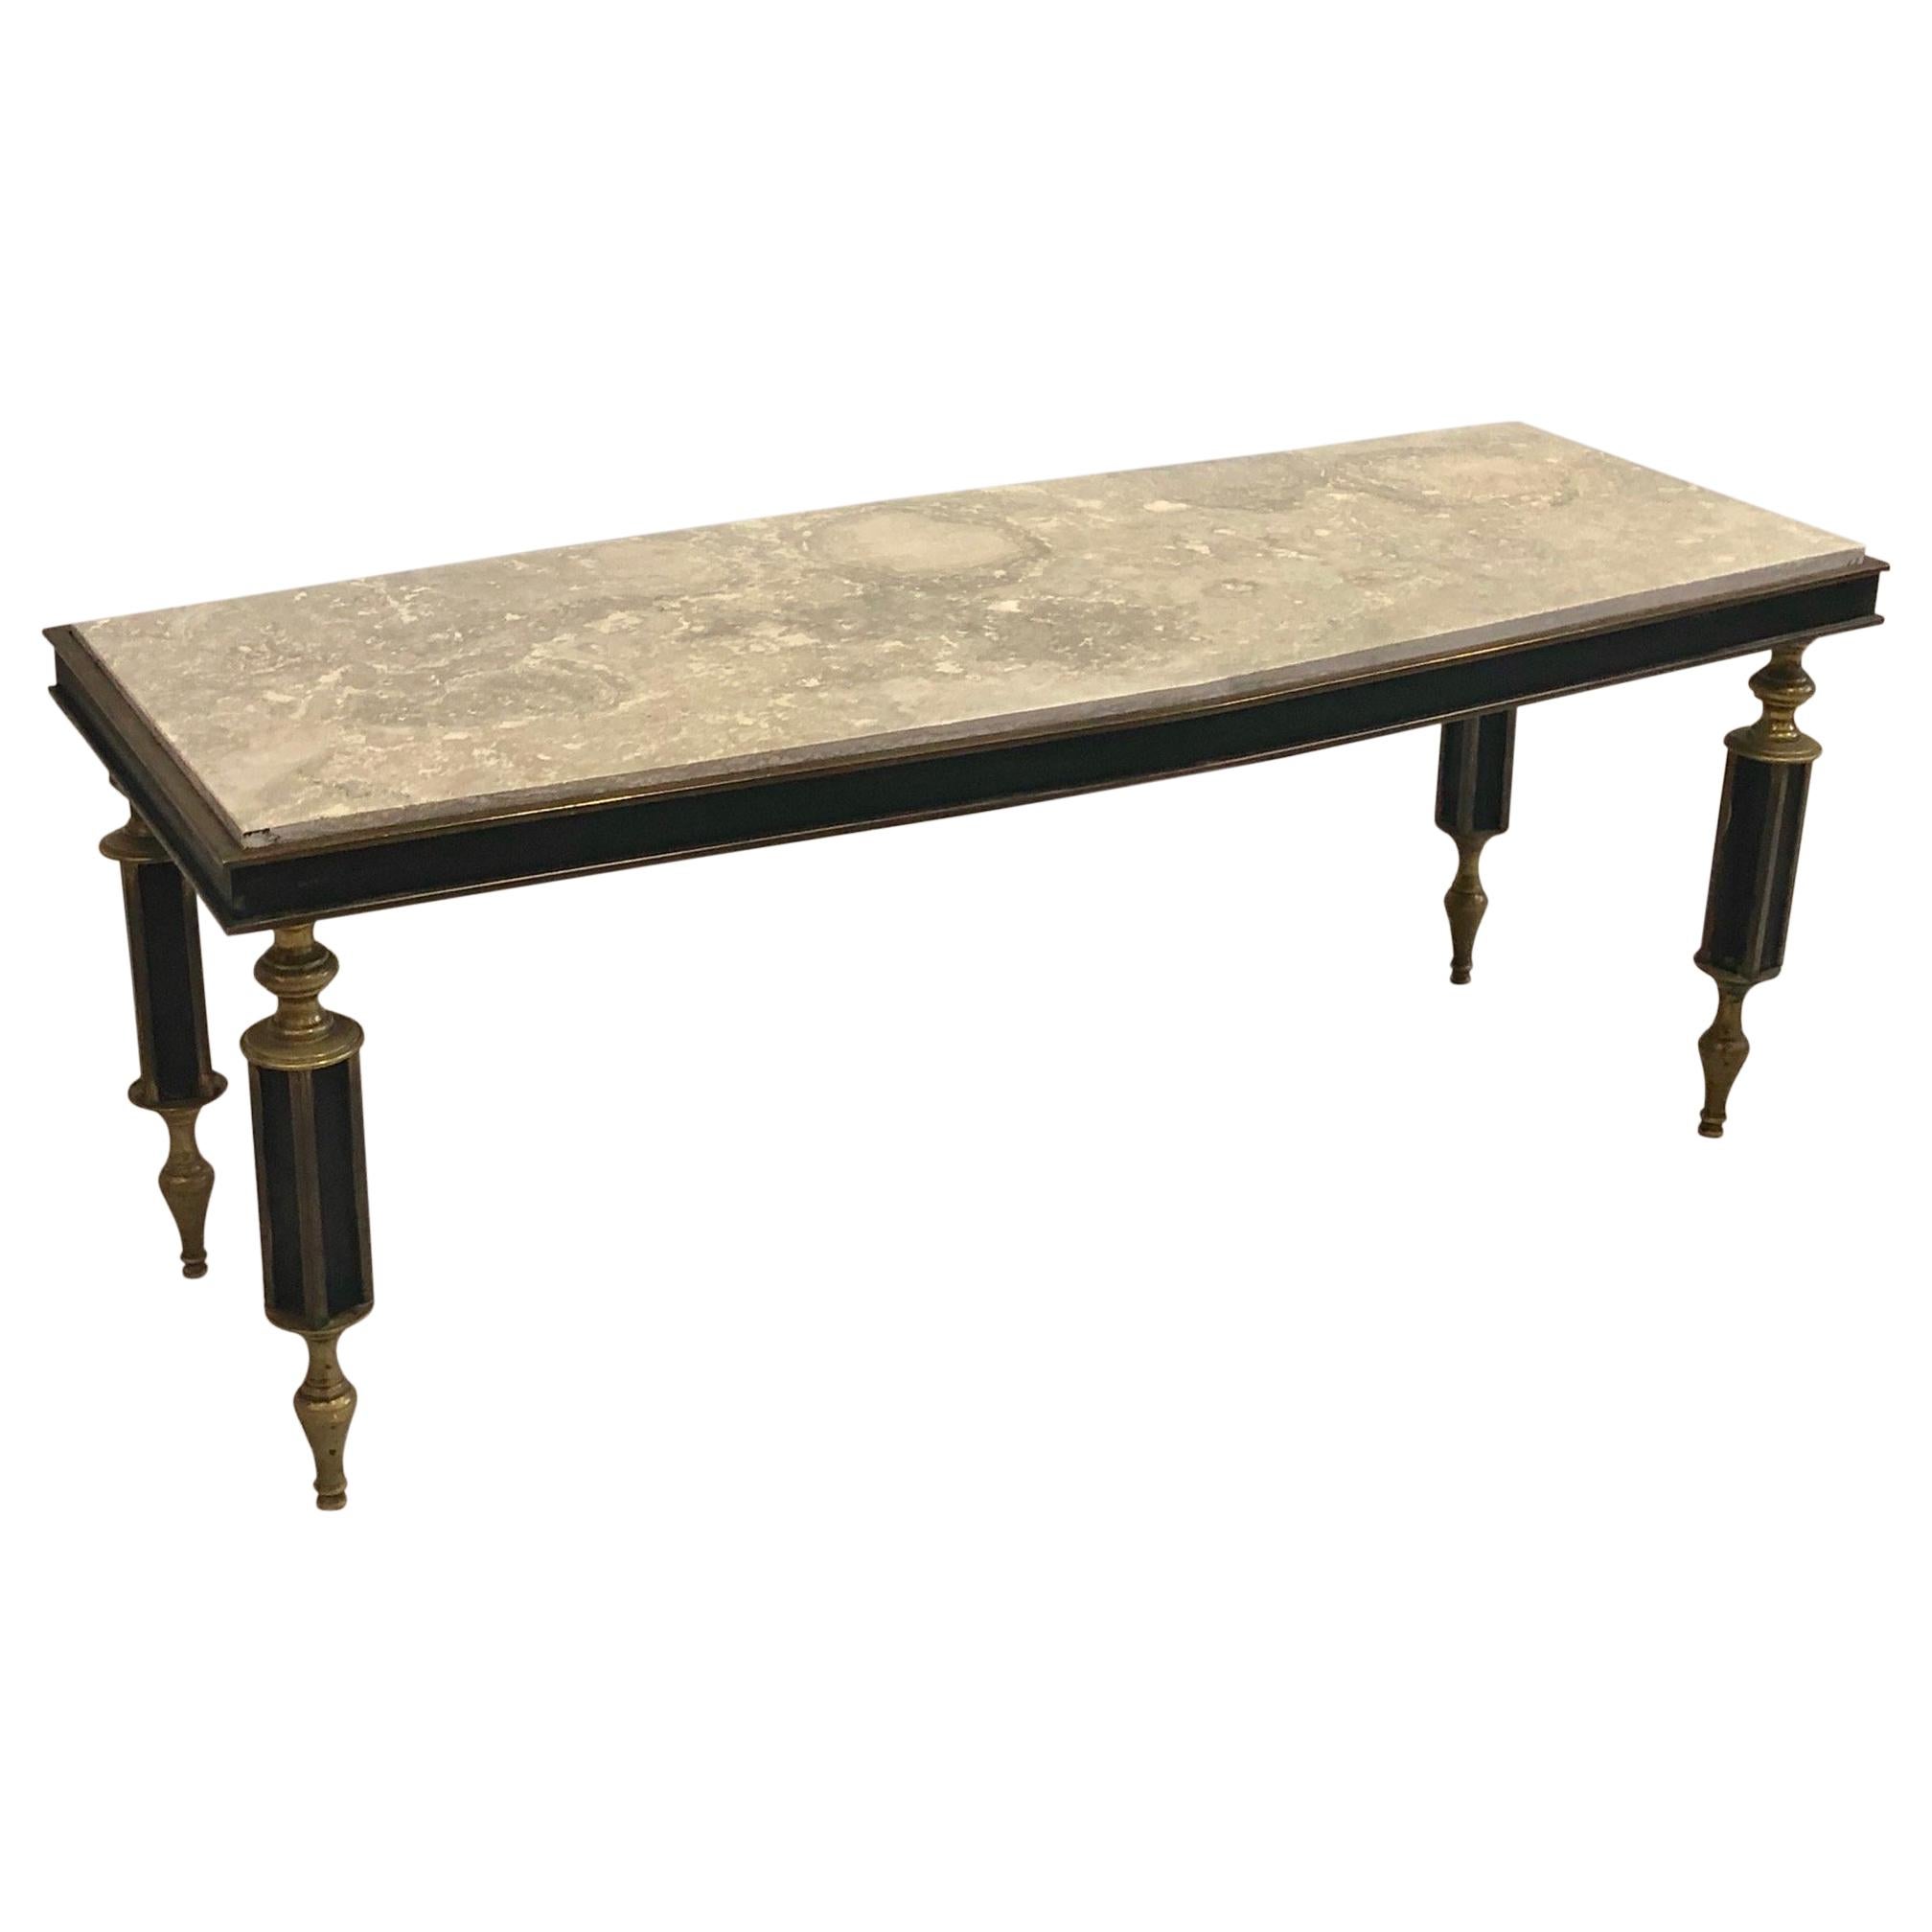 Rare Italian Modern Neoclassical Gilt Bronze Coffee Table Attr. to Gio Ponti For Sale